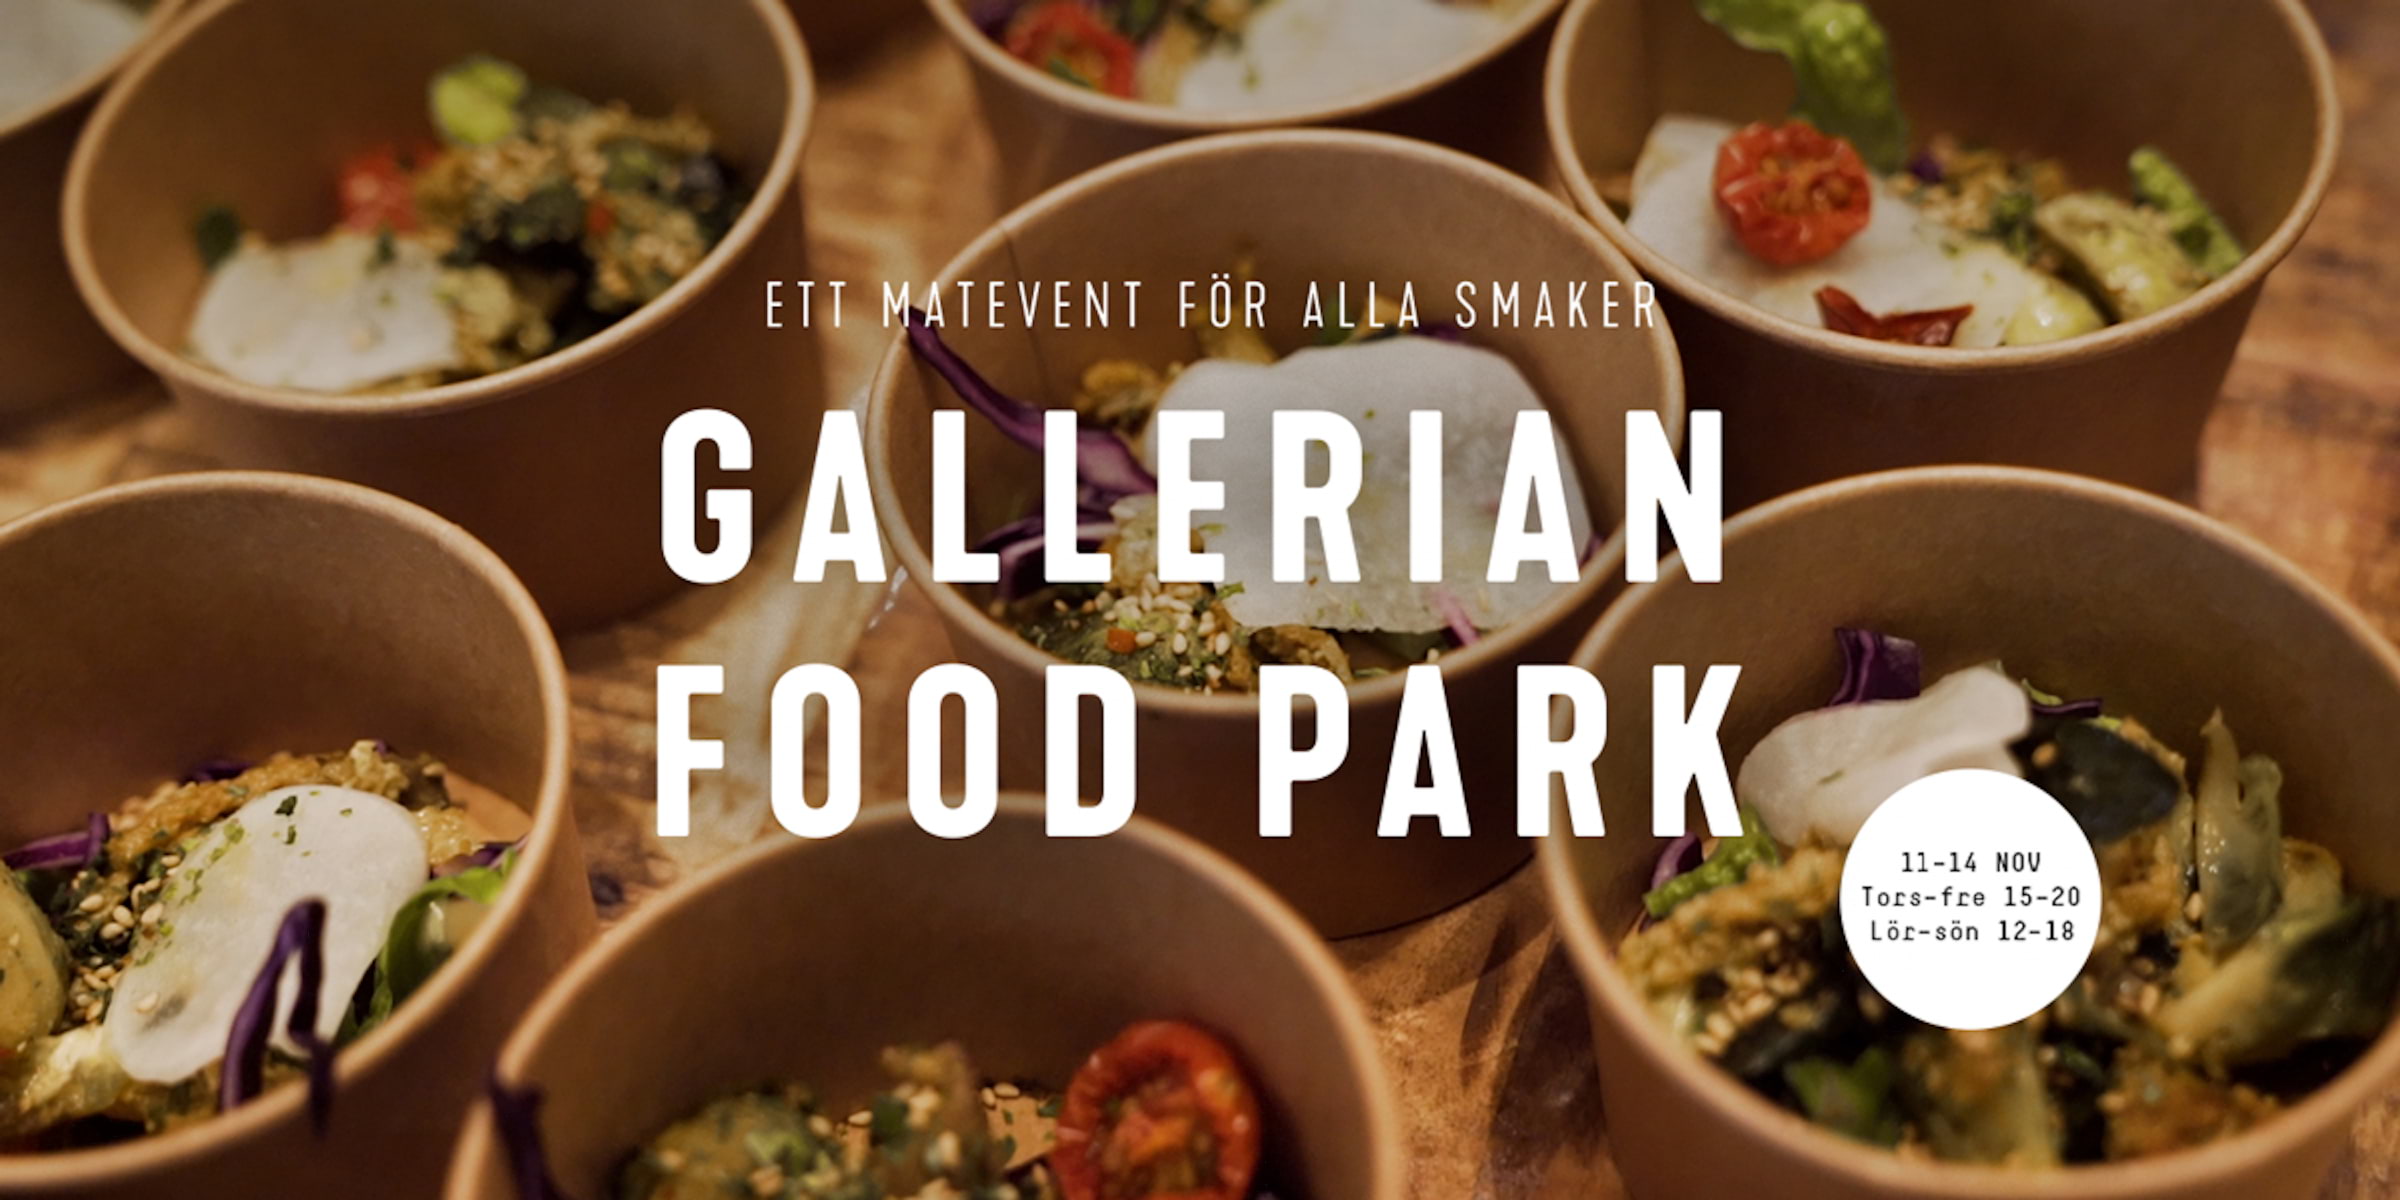 Food Park bjuder in till en smakupplevelse i Gallerian